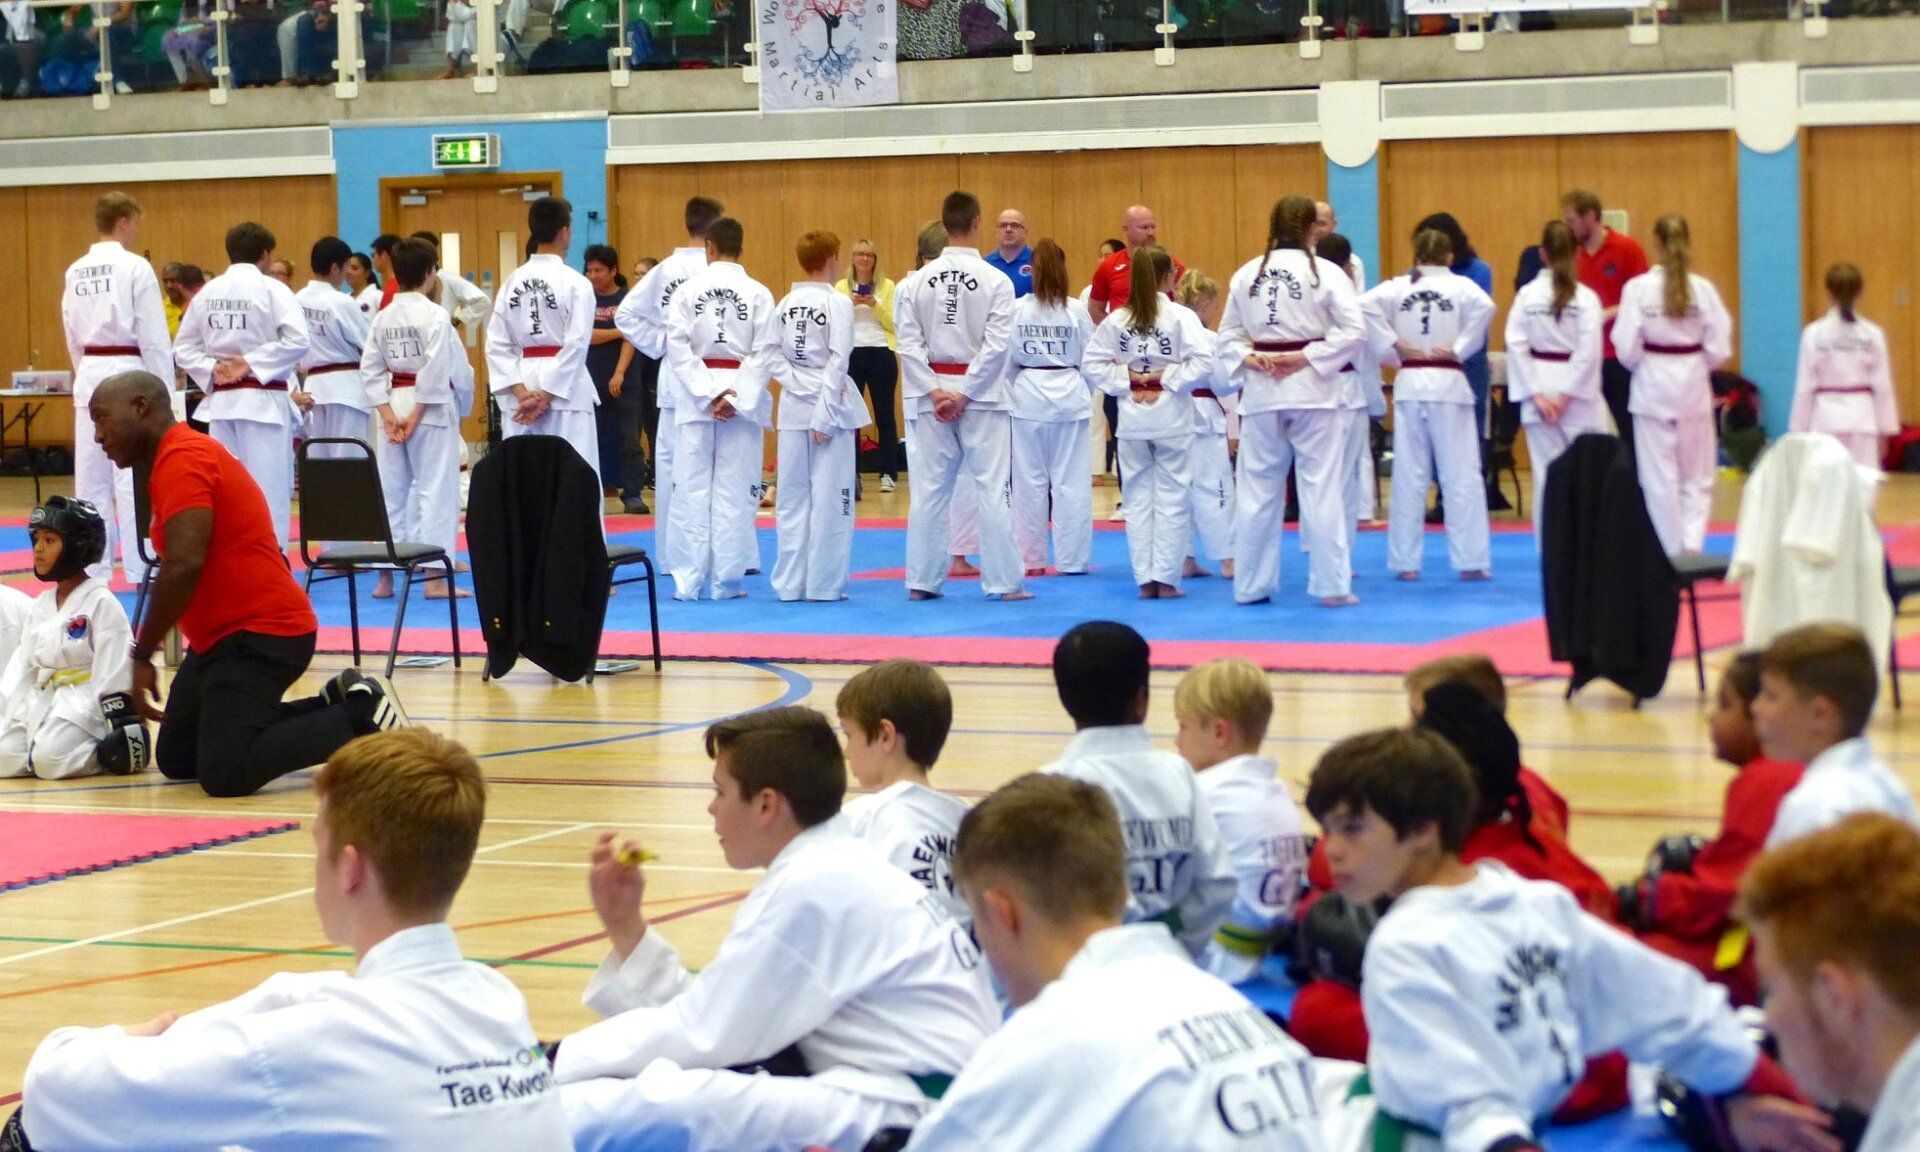 martial arts competitors lining up